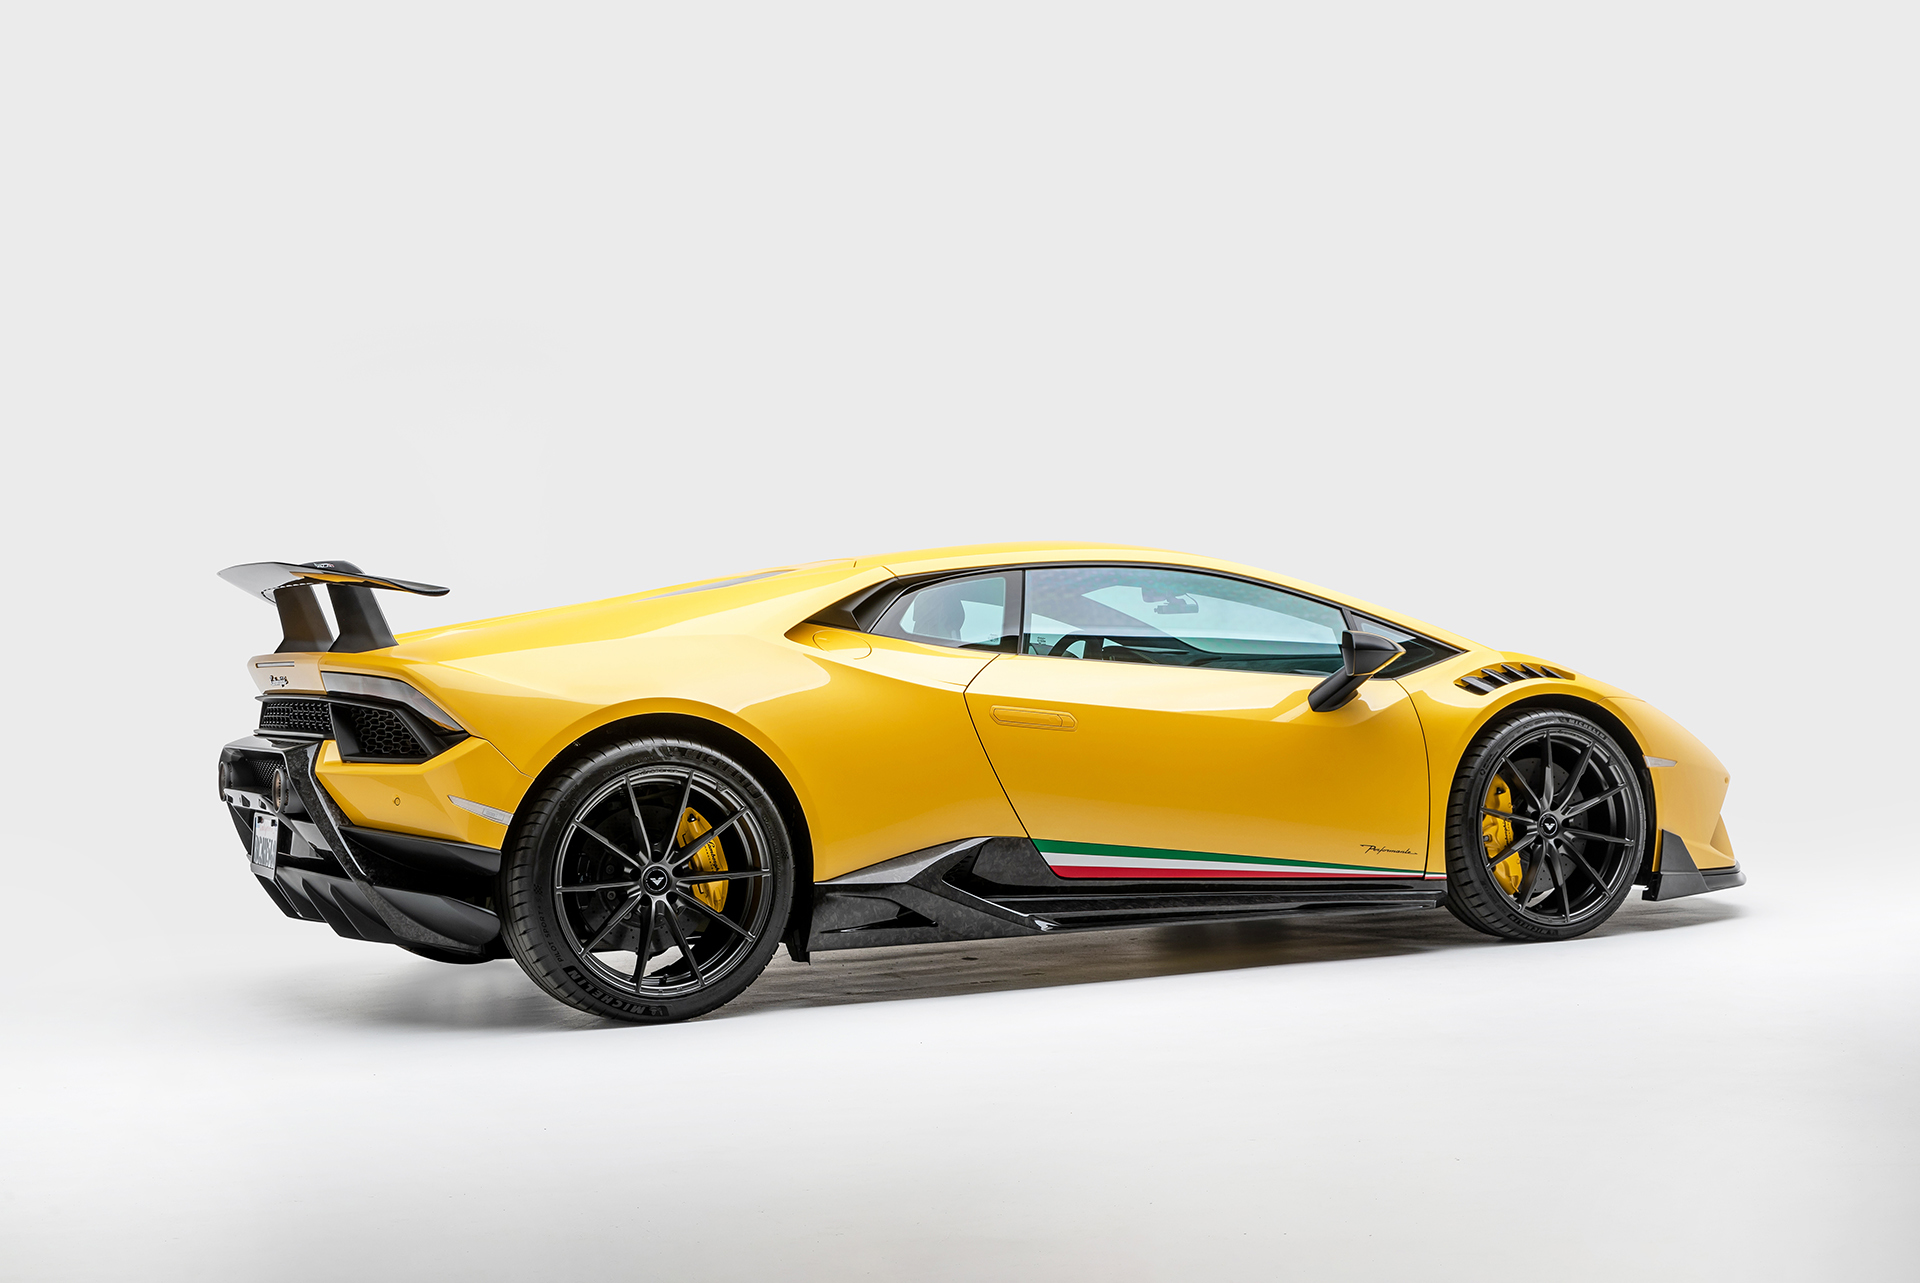 Vorsteiner Nero body kit for Lamborghini Huracan Vincenzo latest model